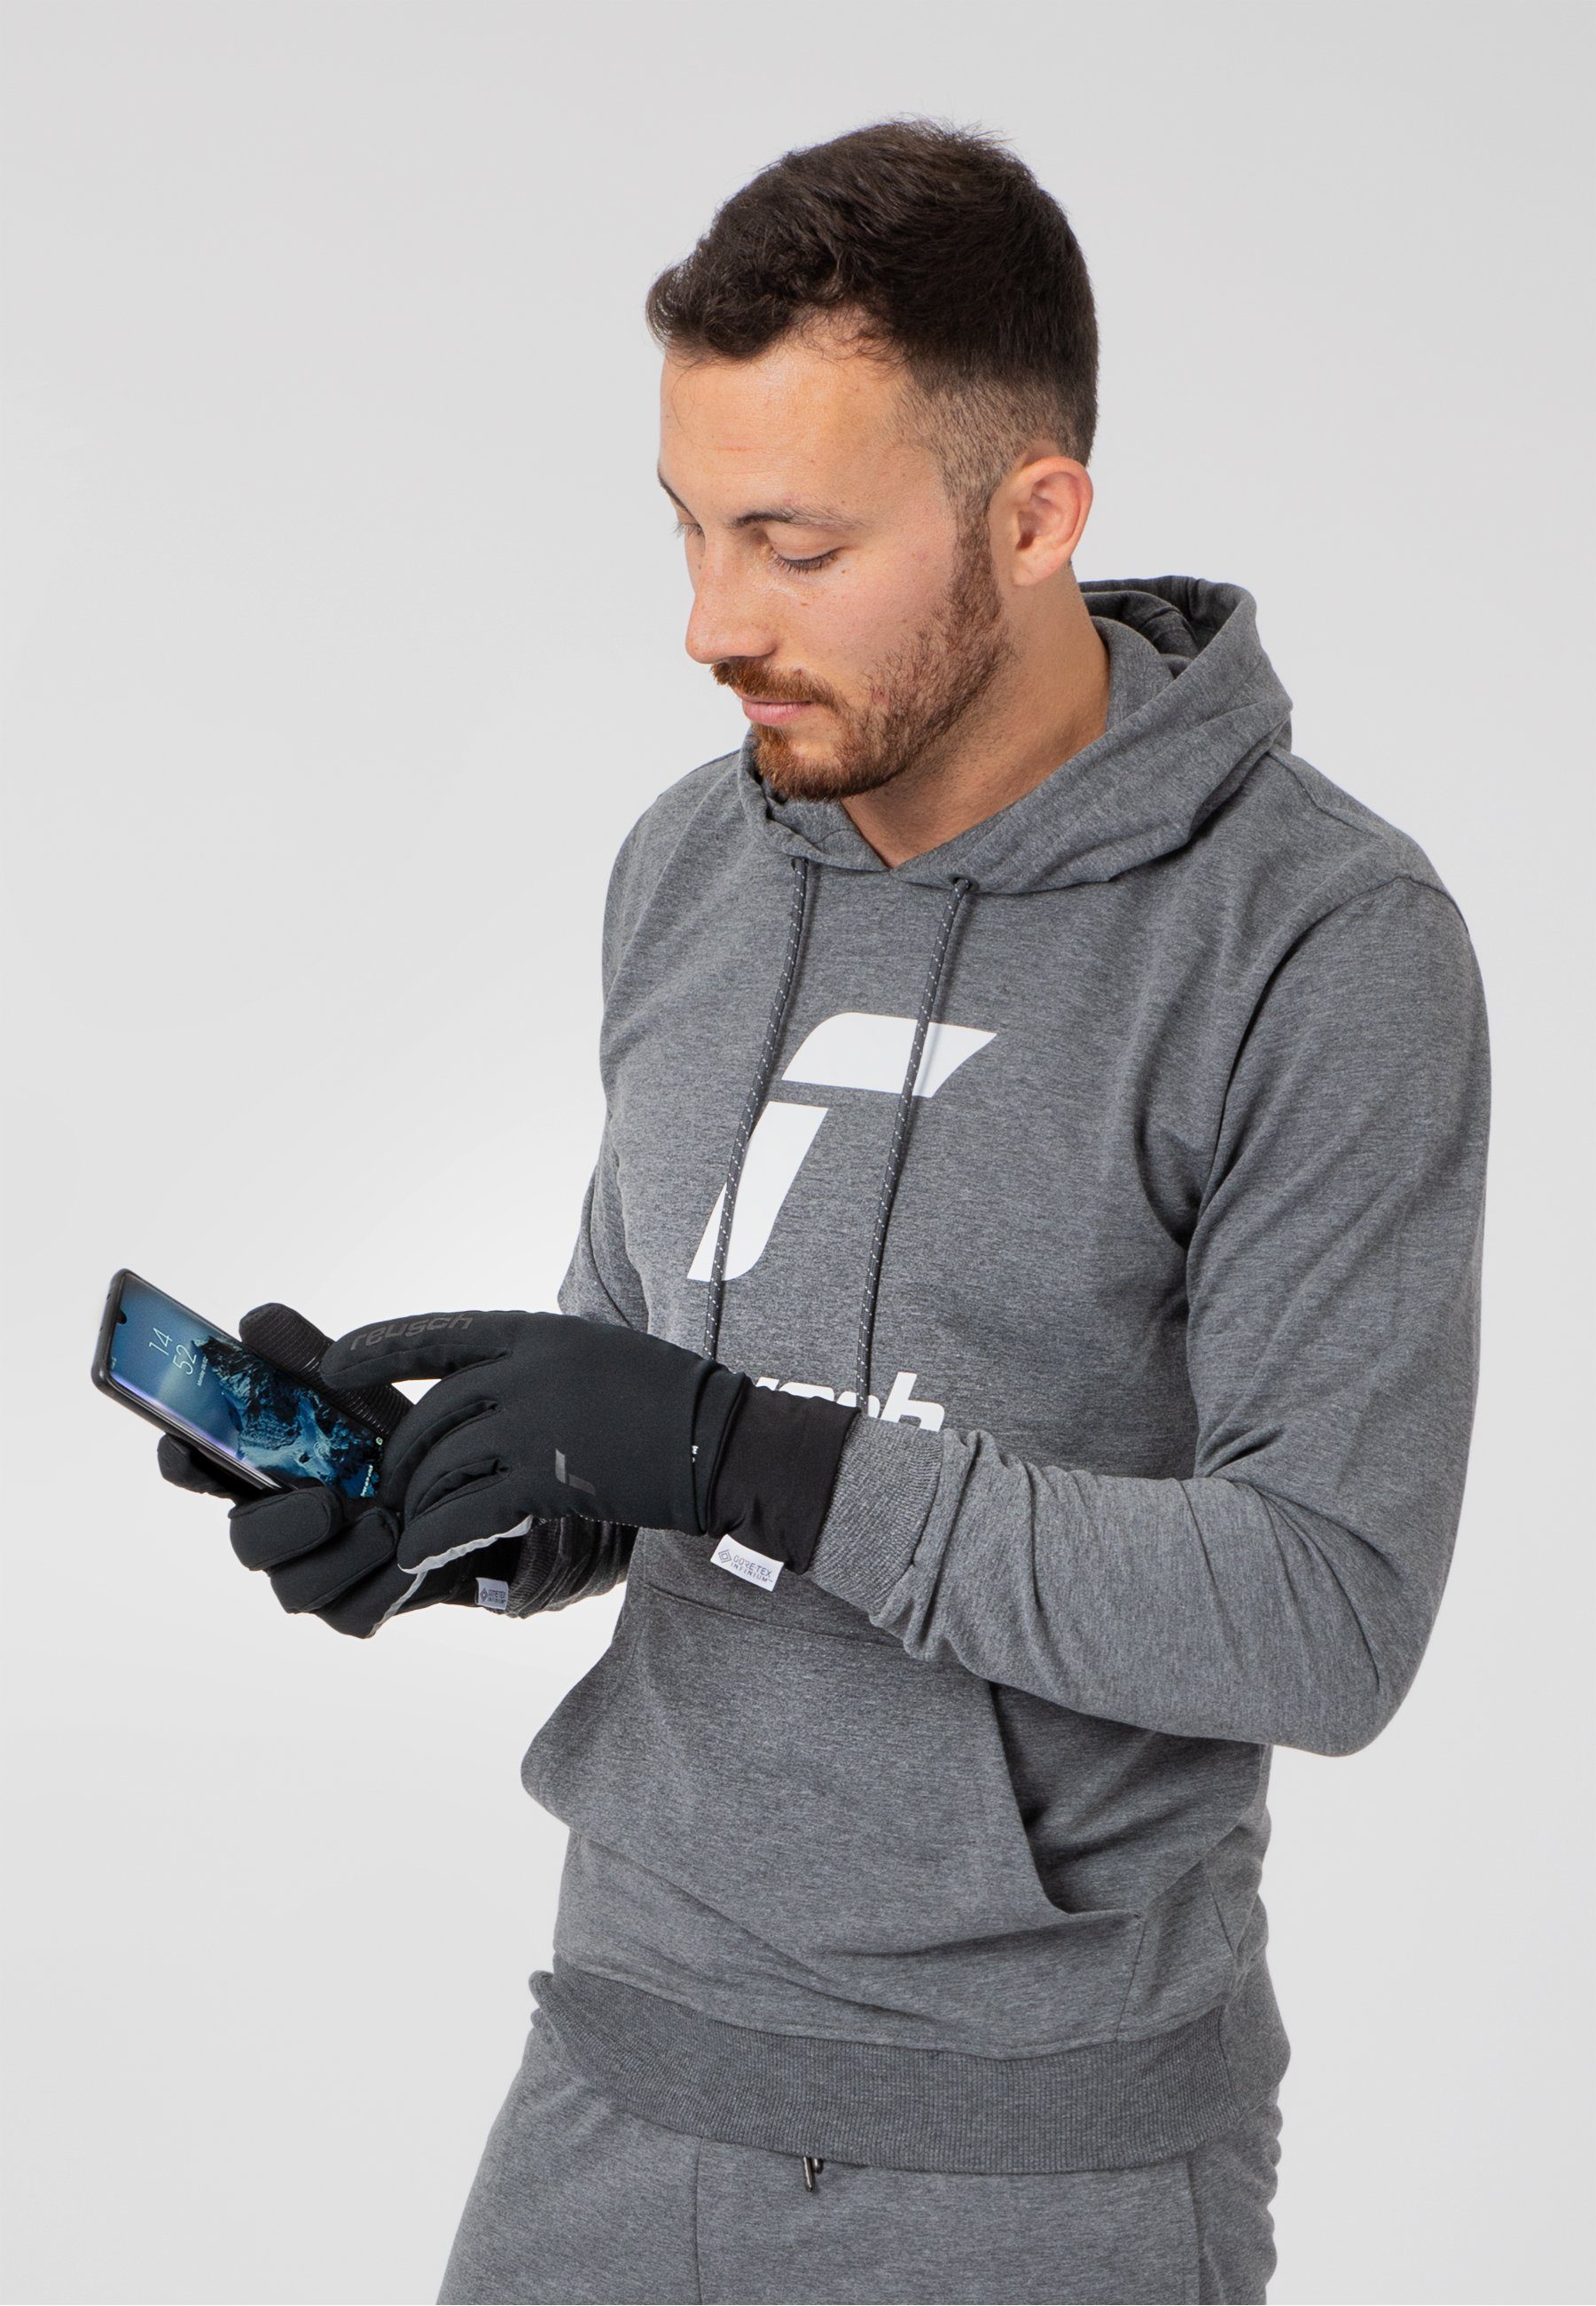 Reusch Laufhandschuhe Multisport Glove GORE-TEX Touchscreen-Funktion mit INFINIUM